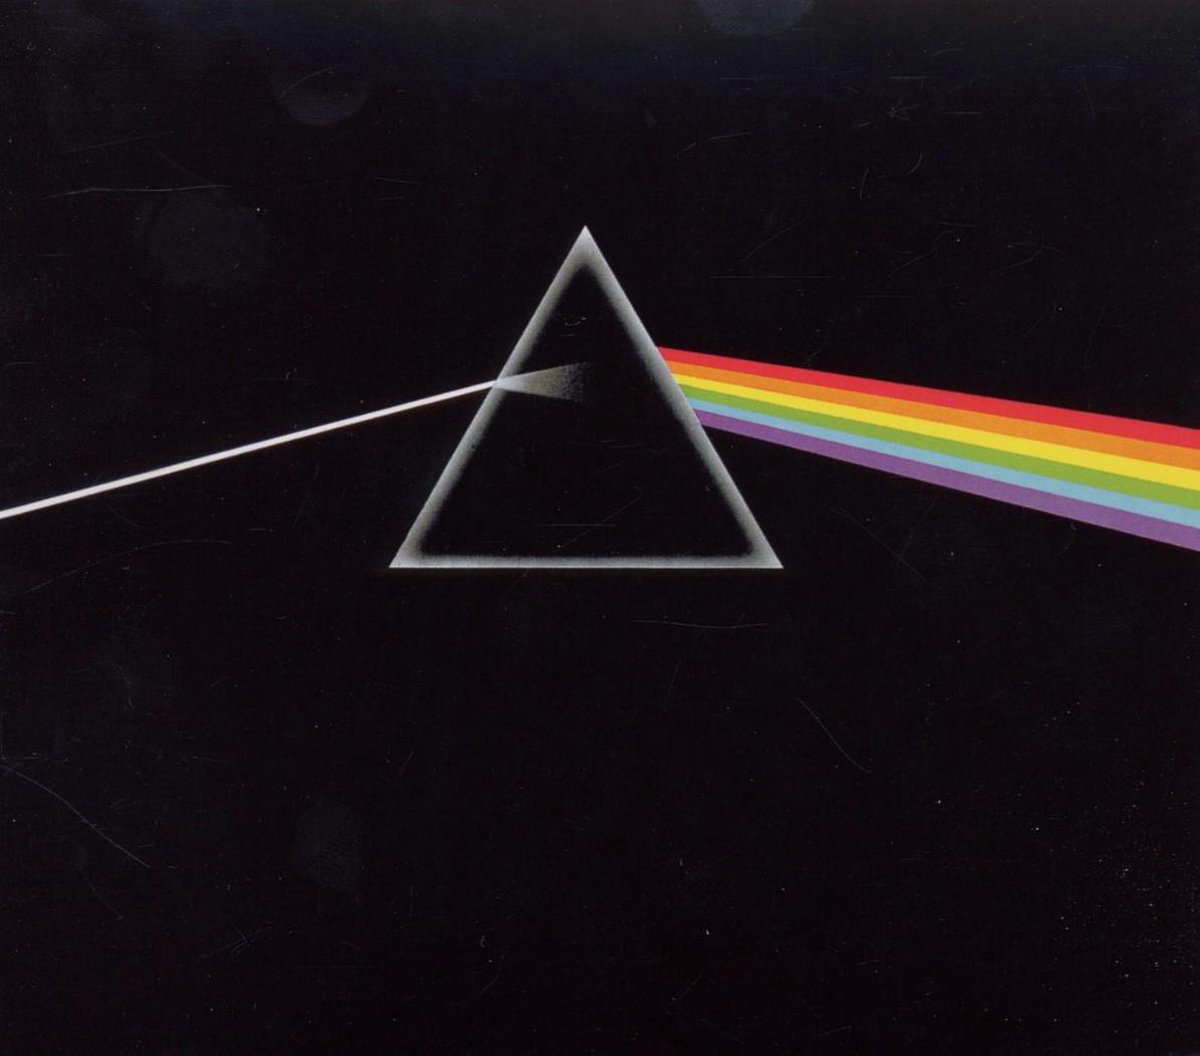 The Dark Side of the Moon (CD) - Pink Floyd